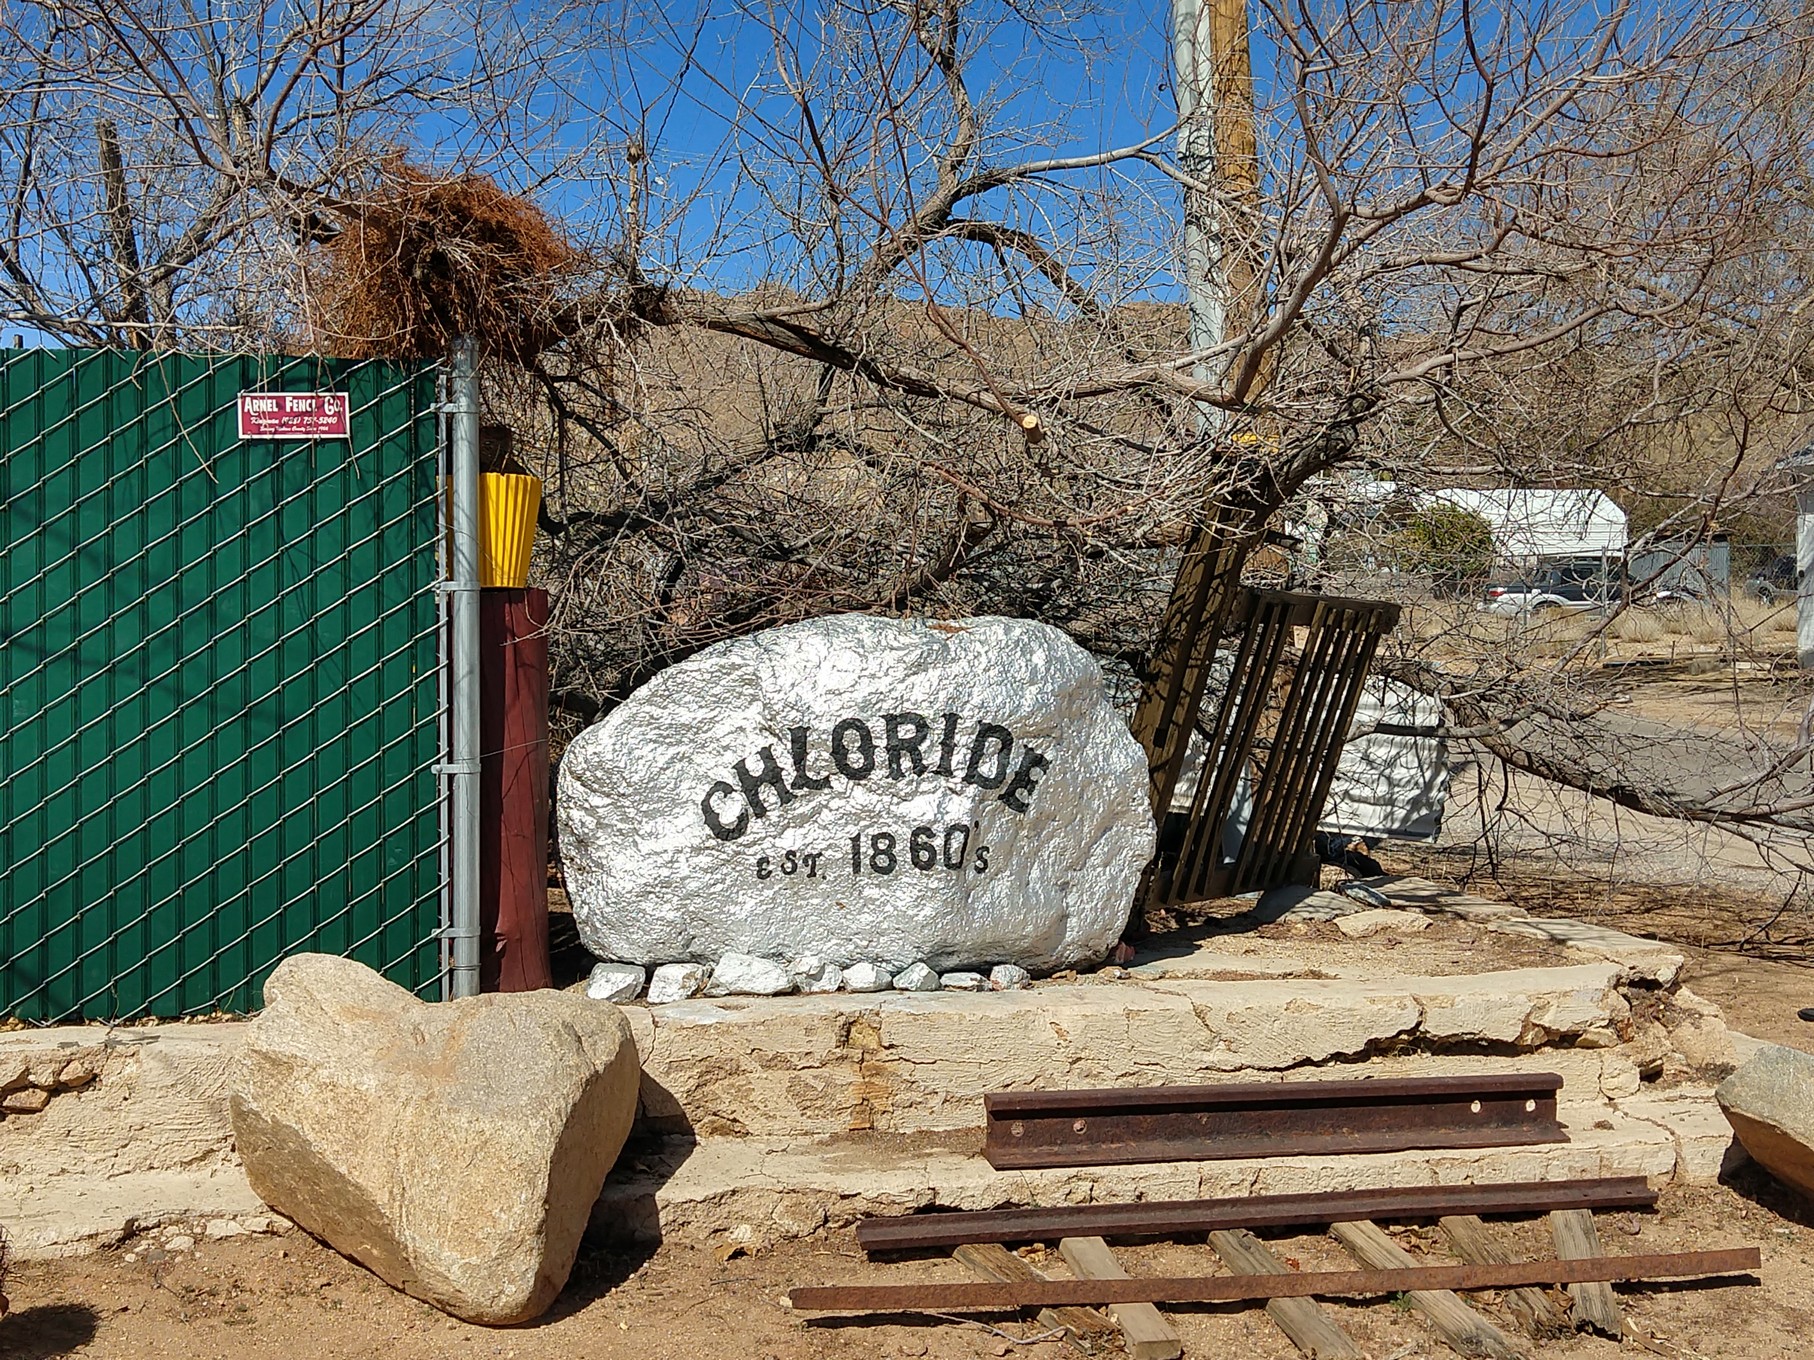 Chloride, AZ